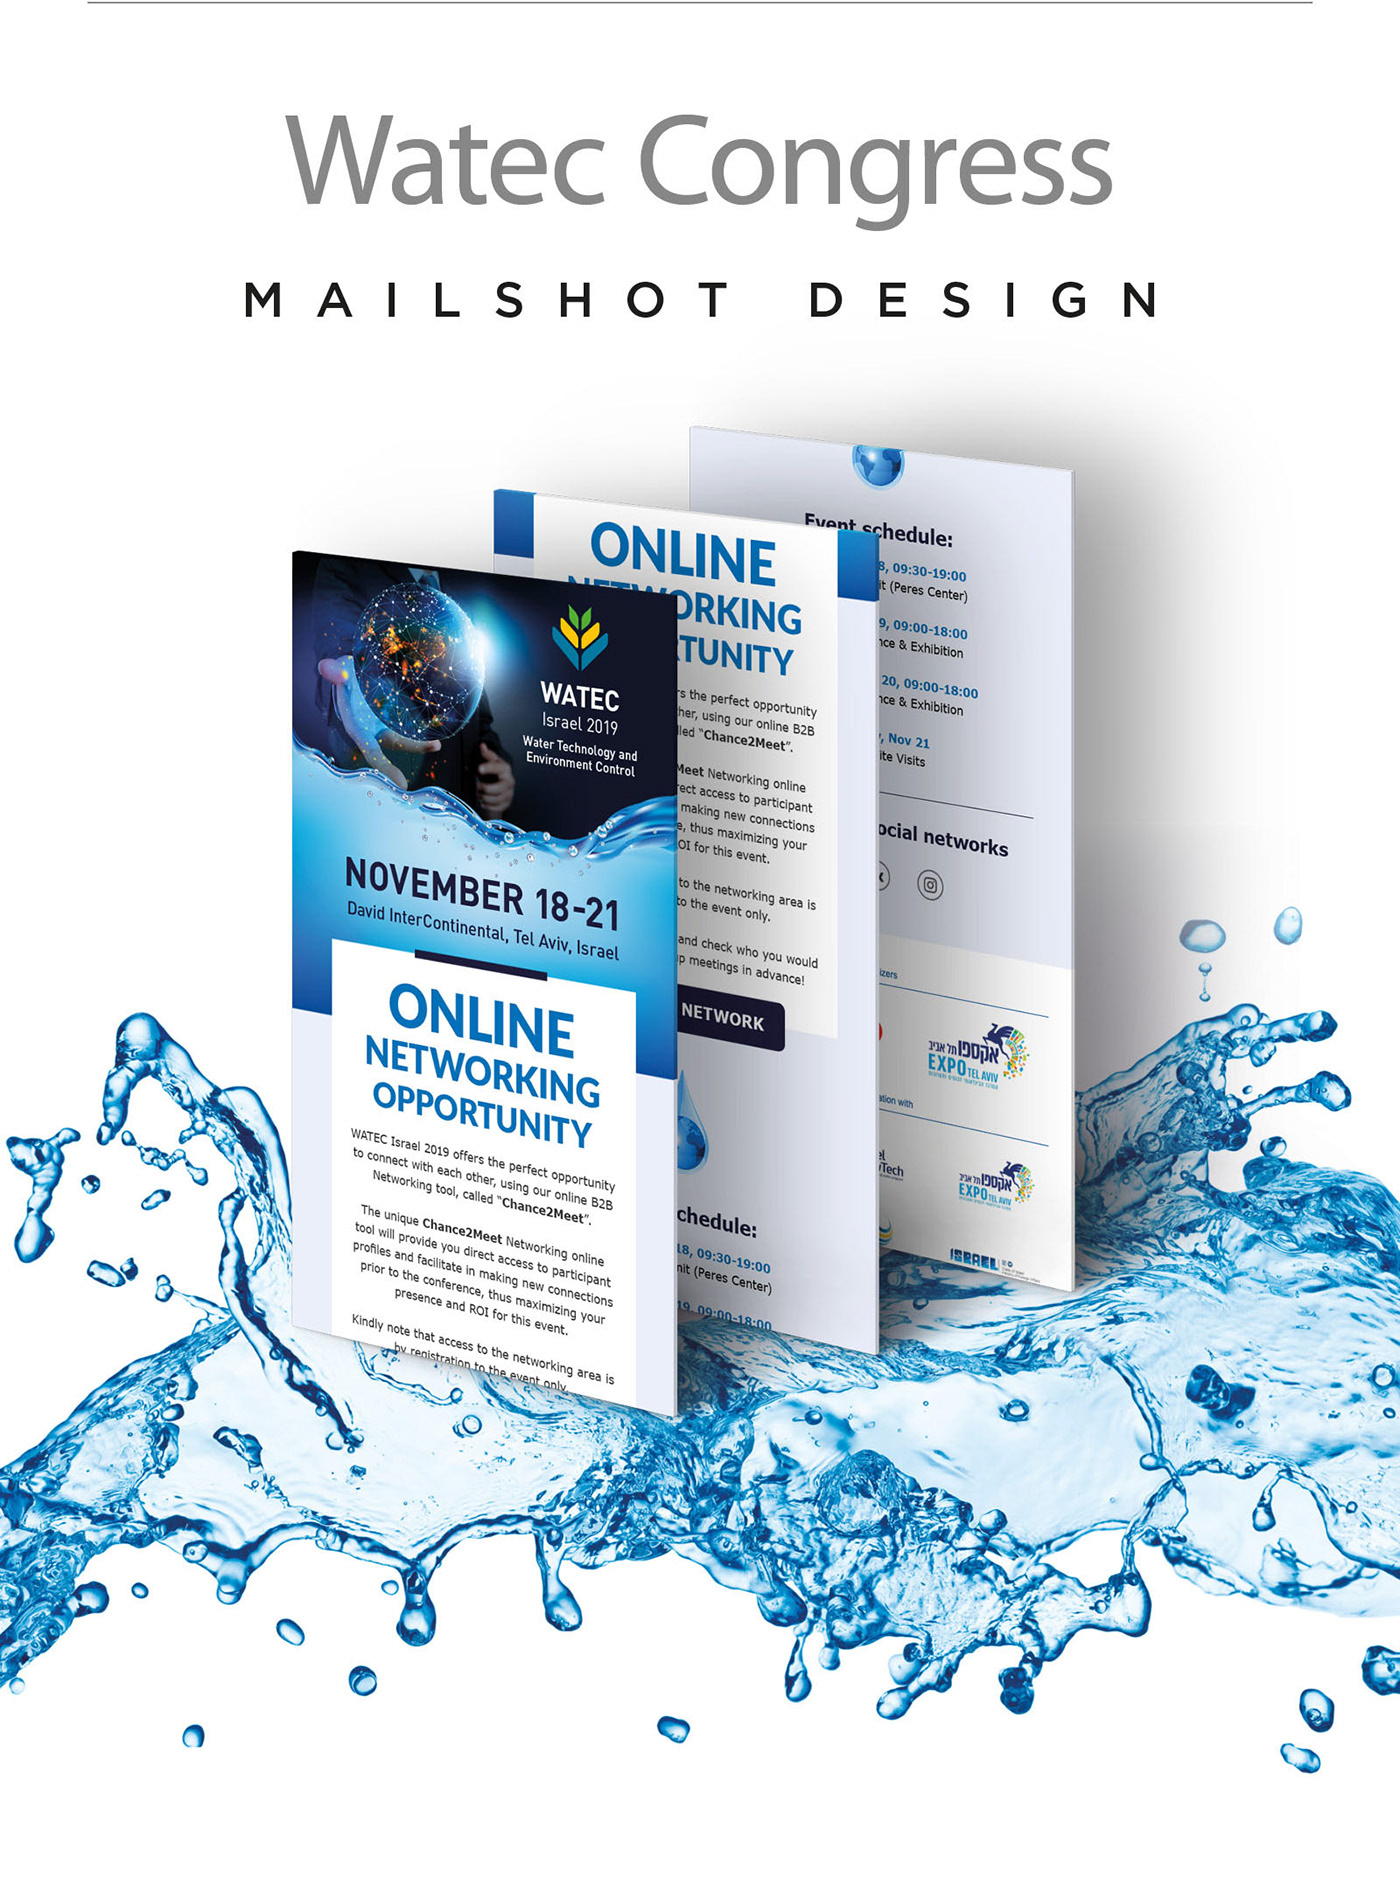 Mailshot newsletter direct marketing e-mail design Newsletter Design mailshot design